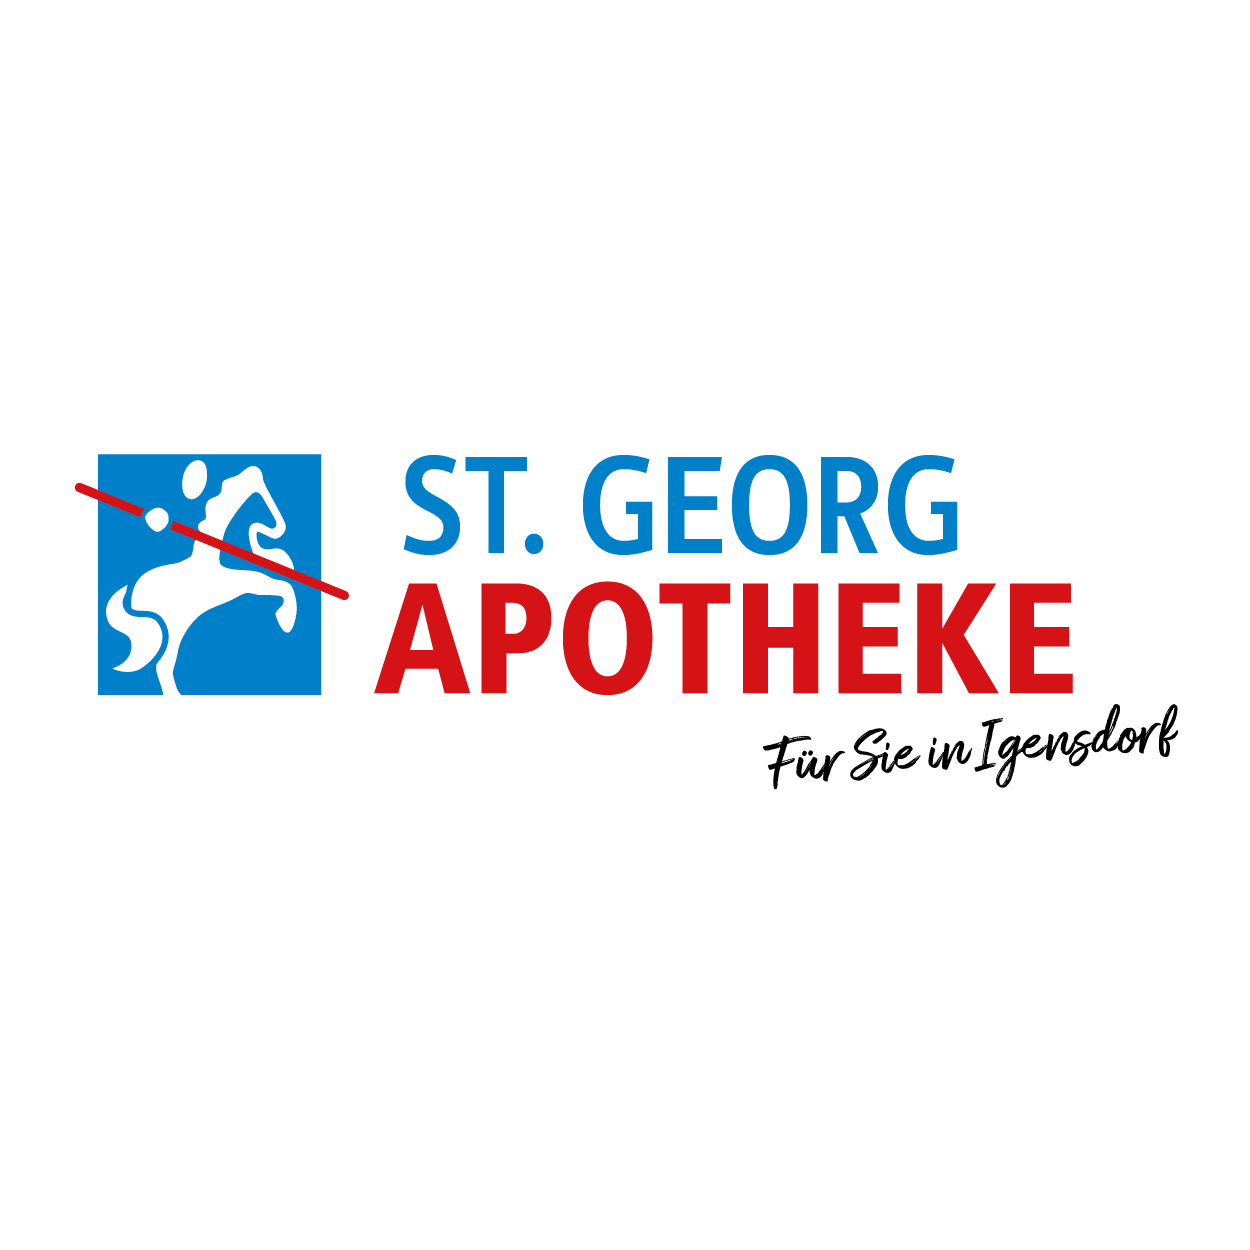 St. Georg-Apotheke in Igensdorf - Logo